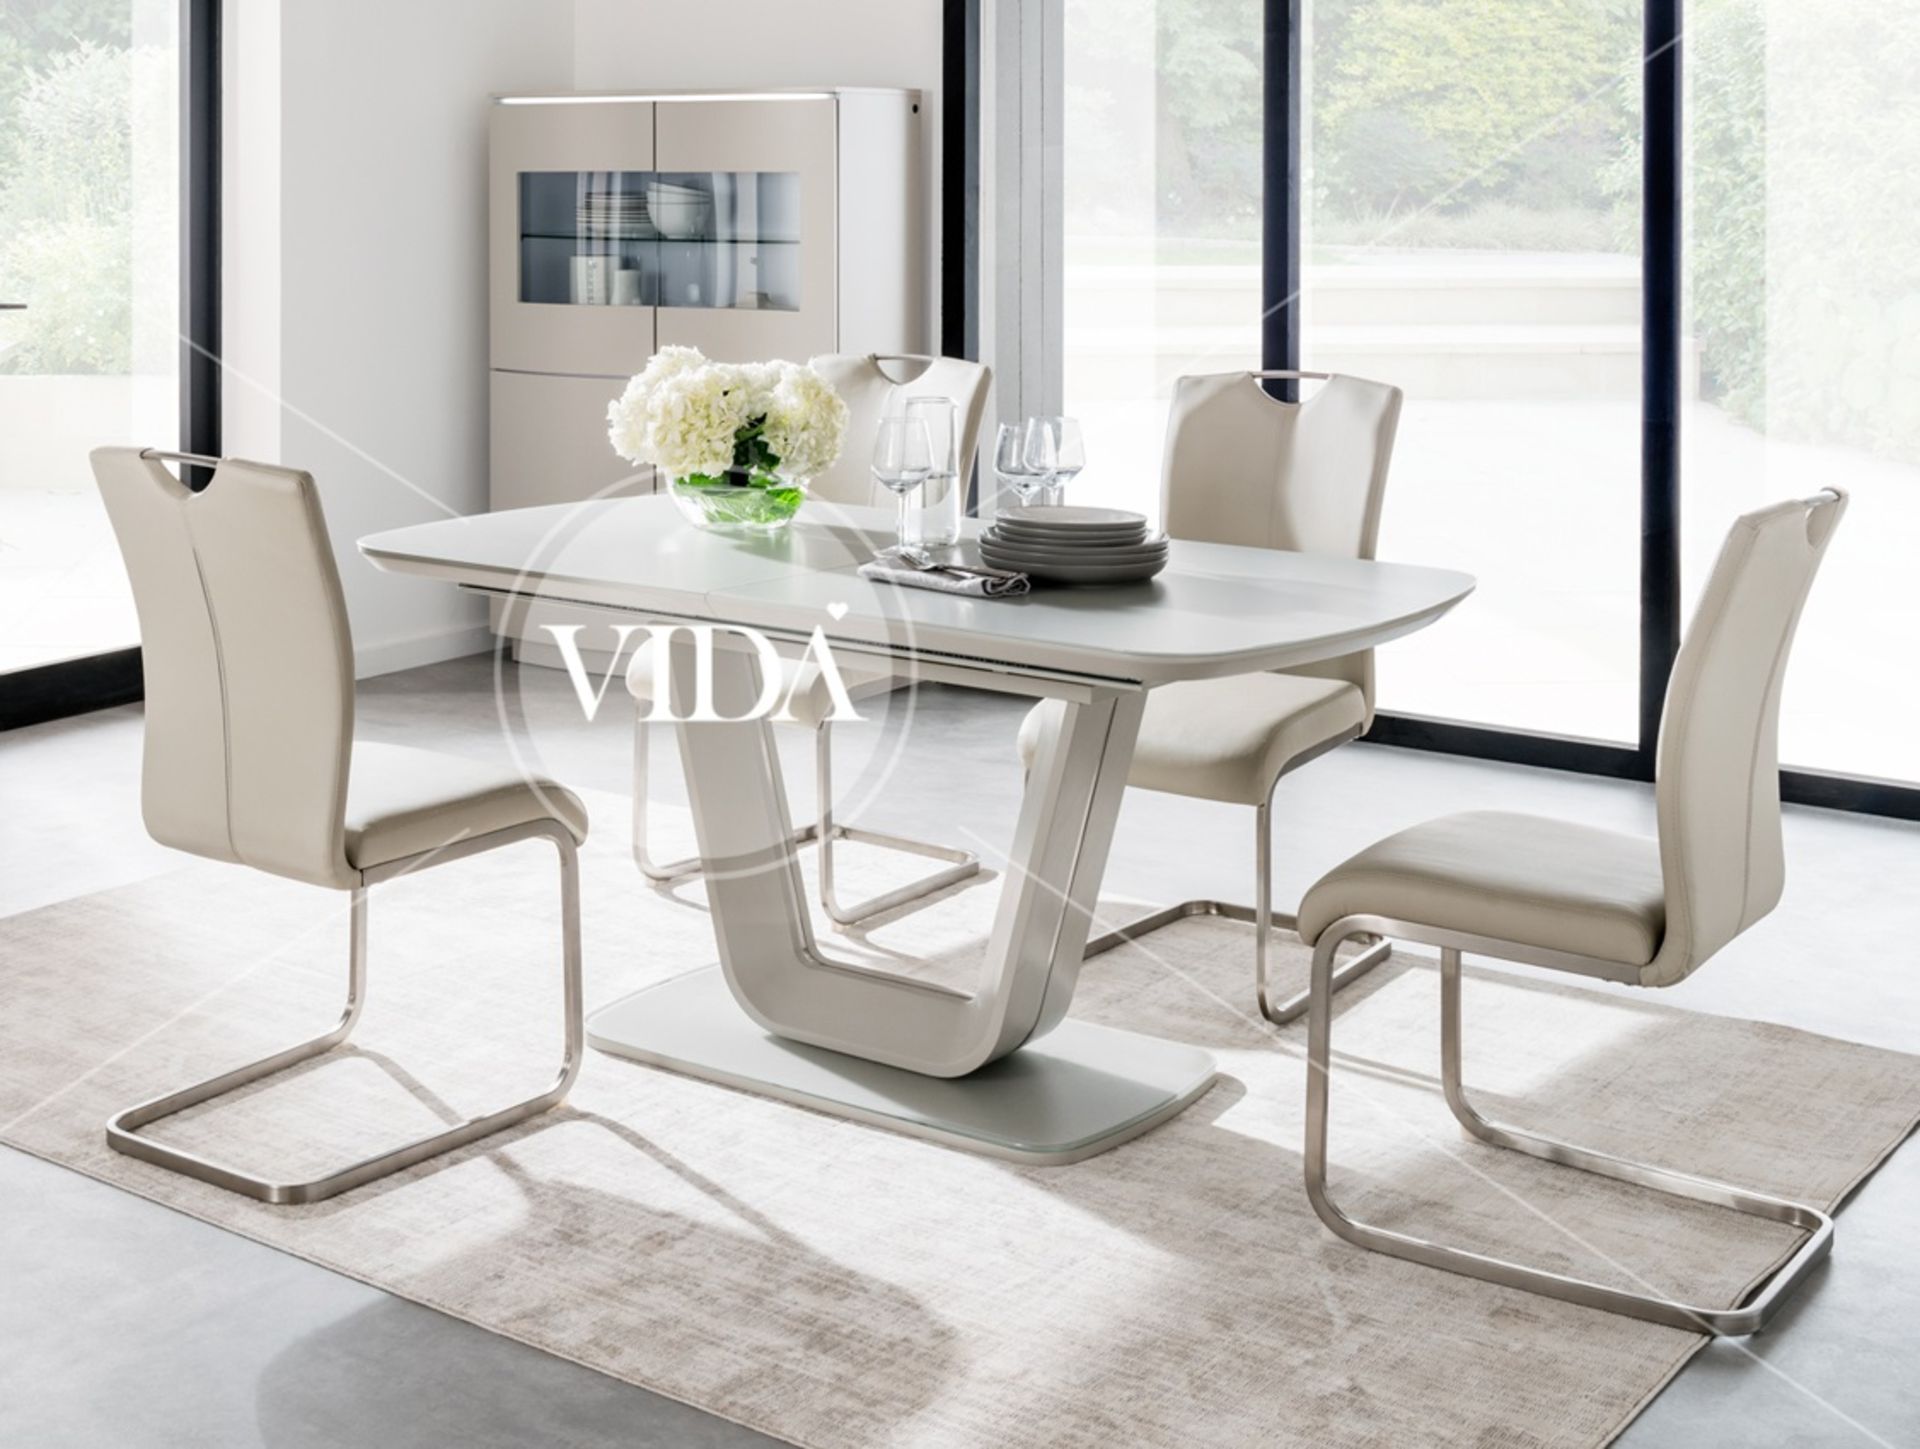 2 x Vida Living Lazzaro Large Extending Dining Table in Gloss White RRP “?652.00 SKU VID-LAZ-203- - Image 3 of 3